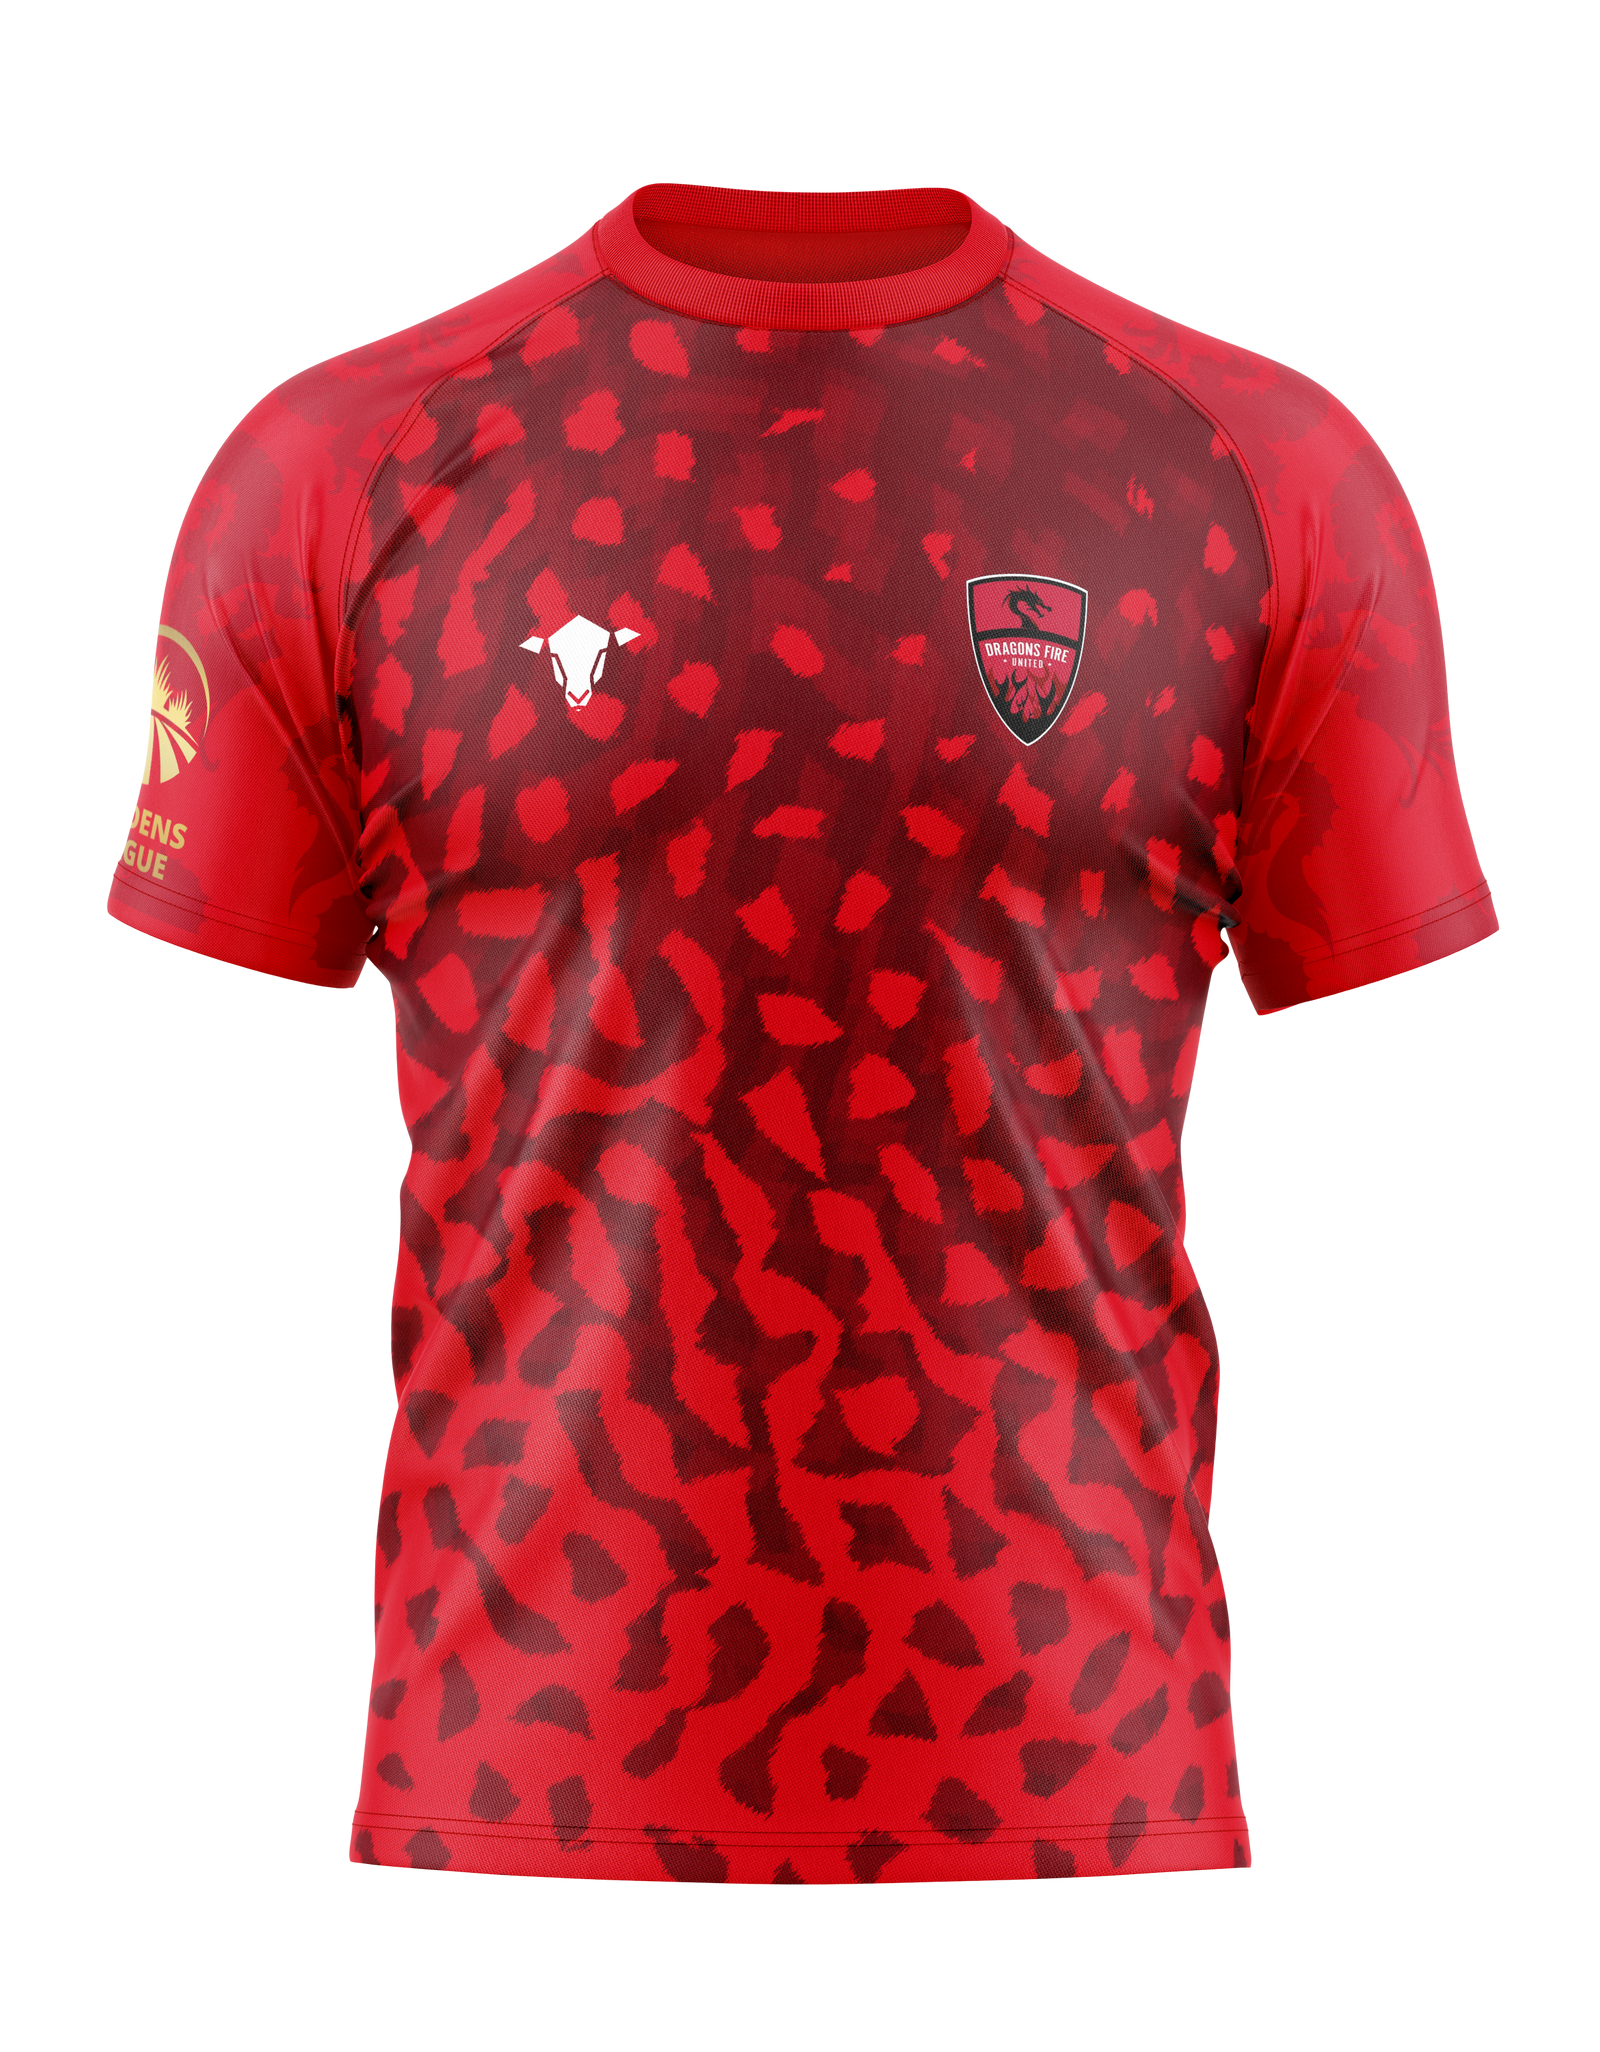 Dragons Fire United - Home Shirt